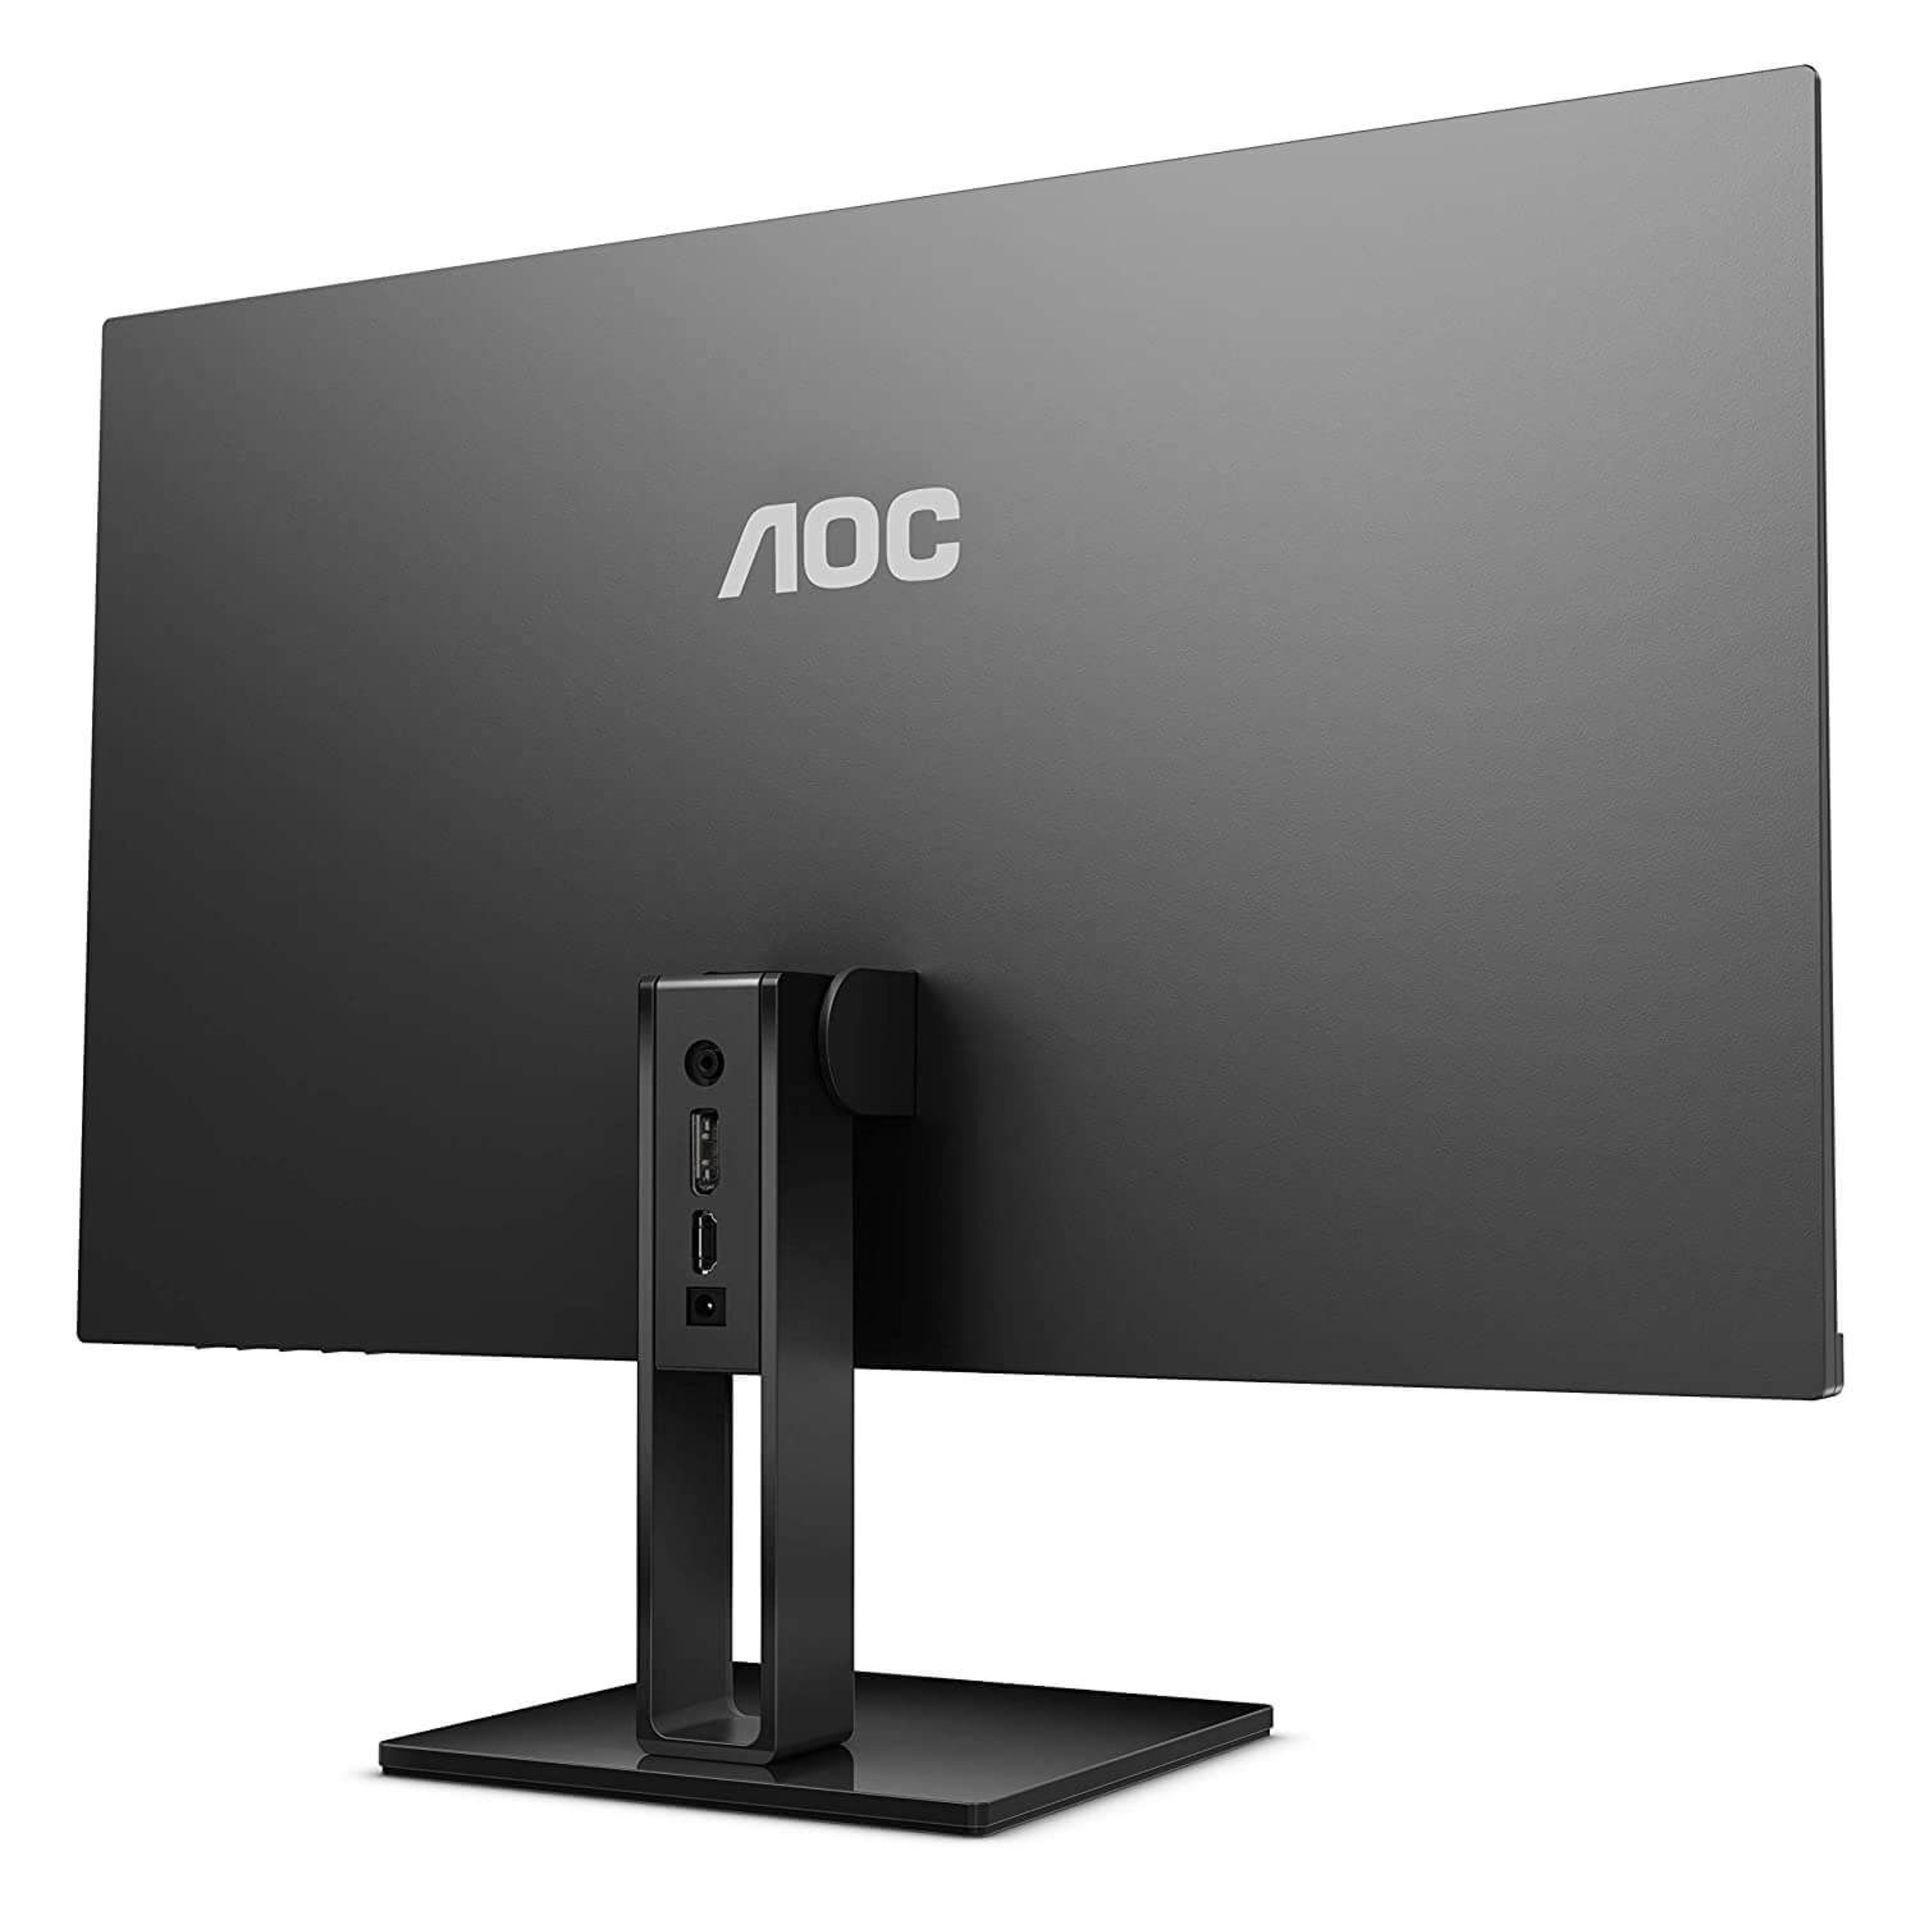 AOC 23.8-inch LED Monitor with Display Port, HDMI Port, Ultra Slim – 24V2Q (Black). - PCKBW. RRP £ - Image 2 of 2